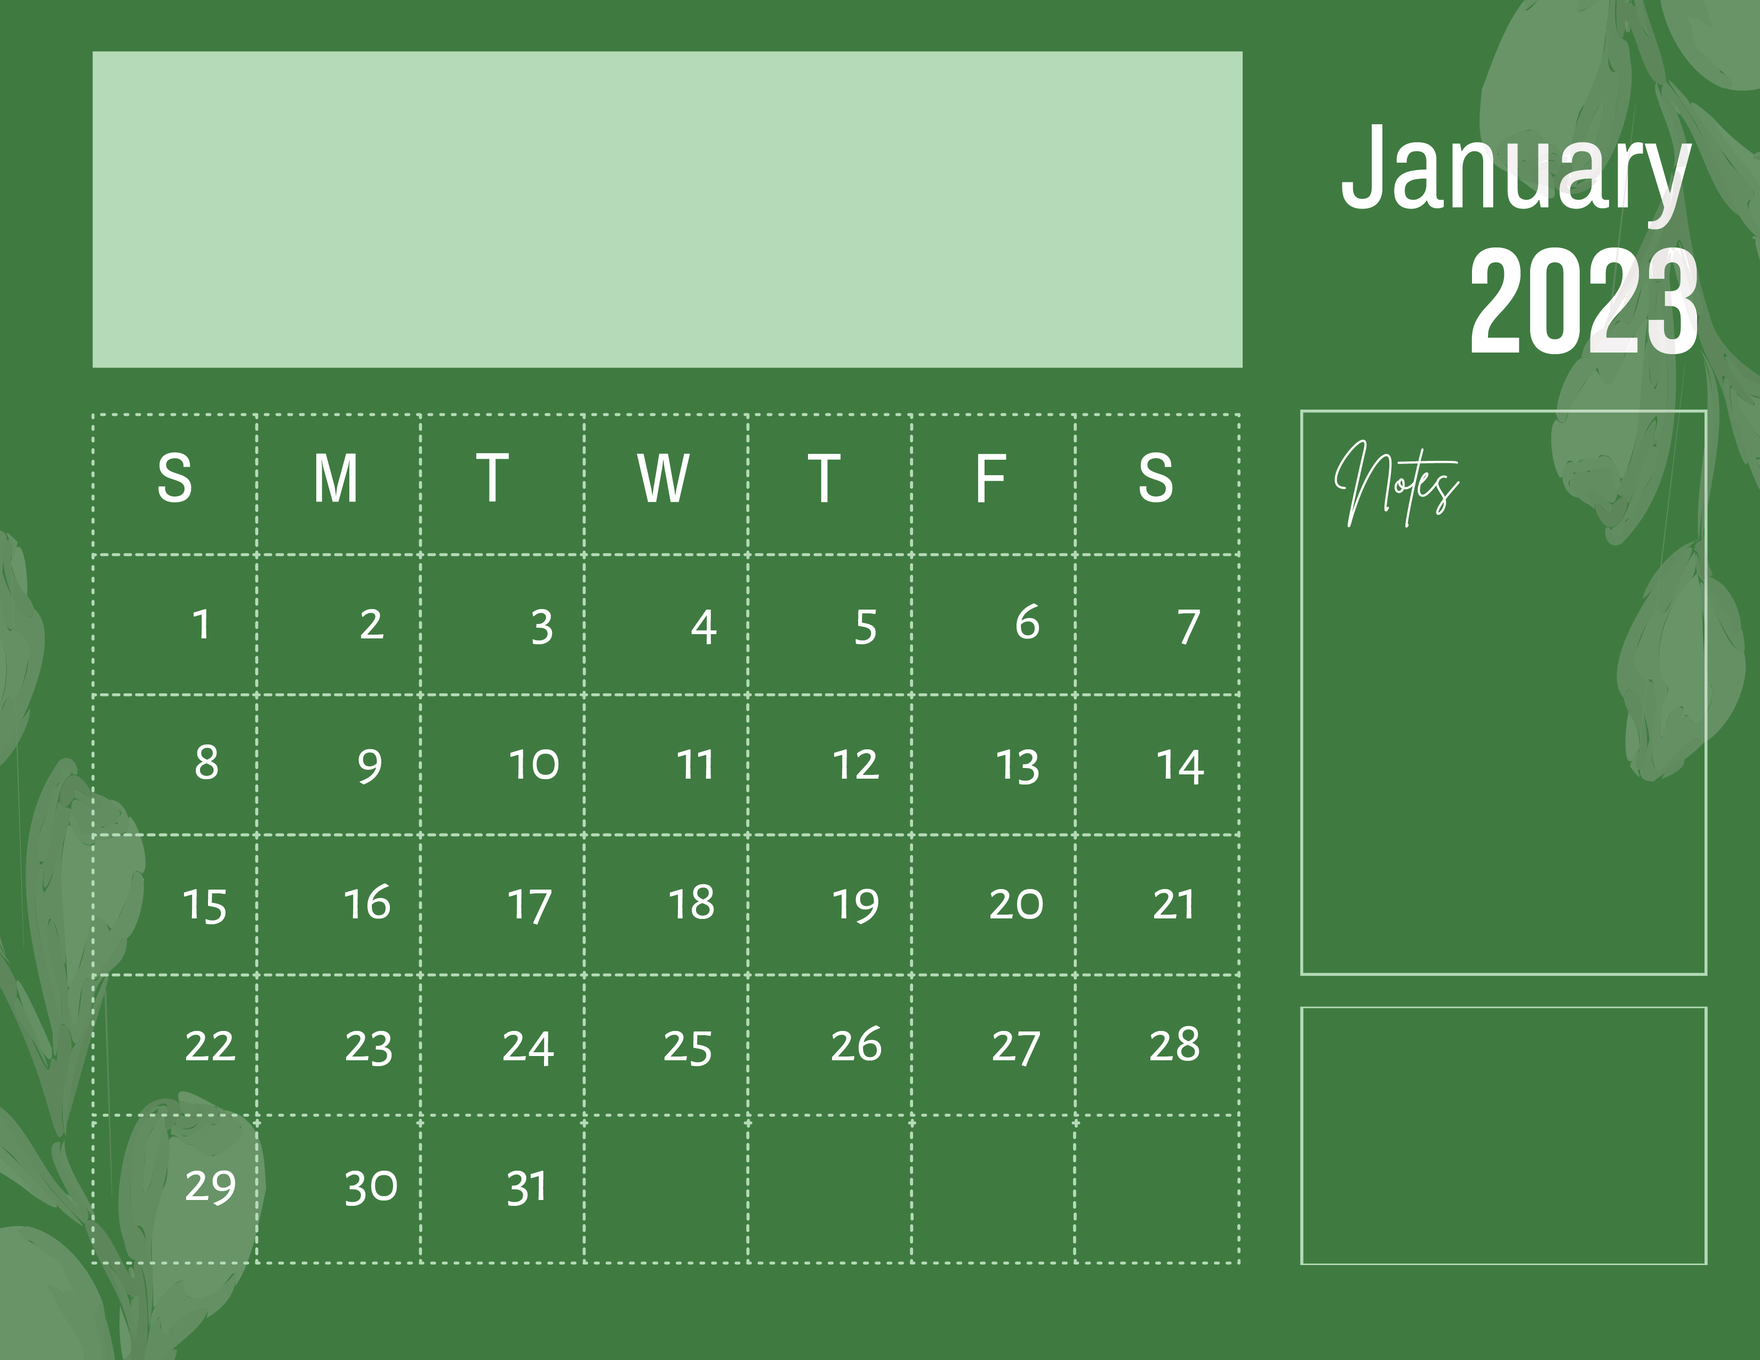 Free Blank January 2023 Calendar Template